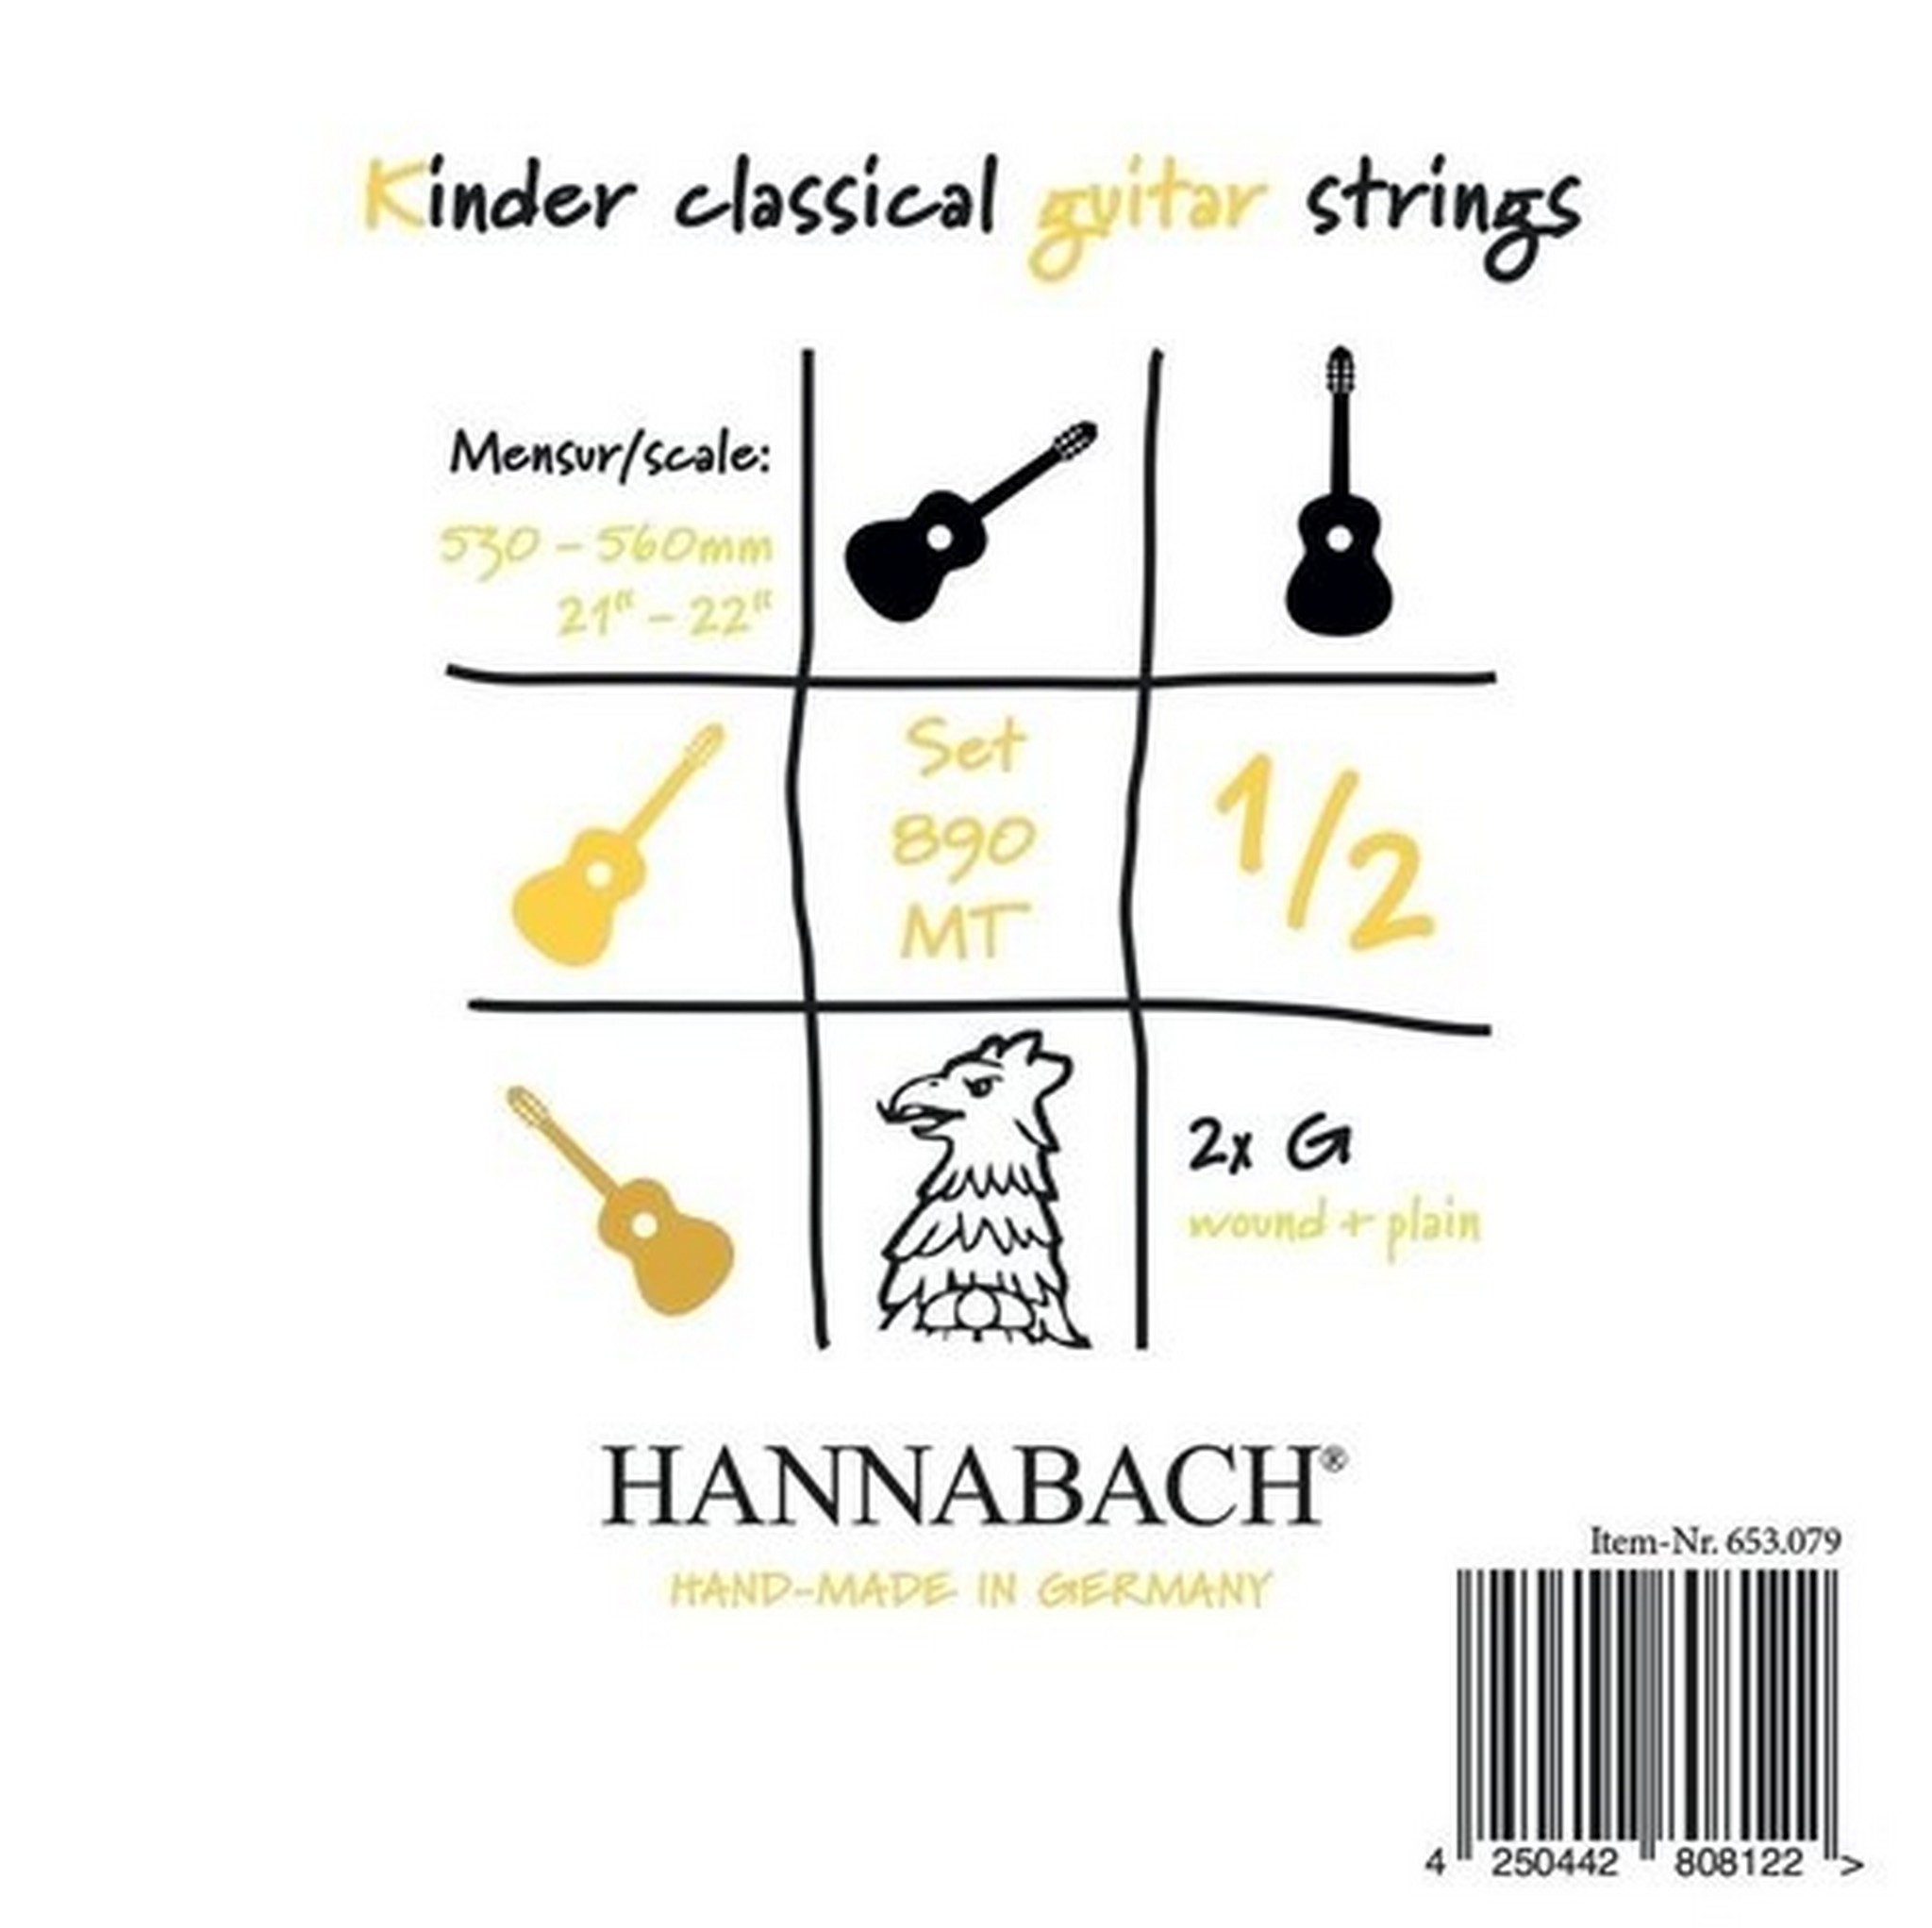 Hannabach 890 MT 1/2 Gitarre Nylonsaiten Bild 1